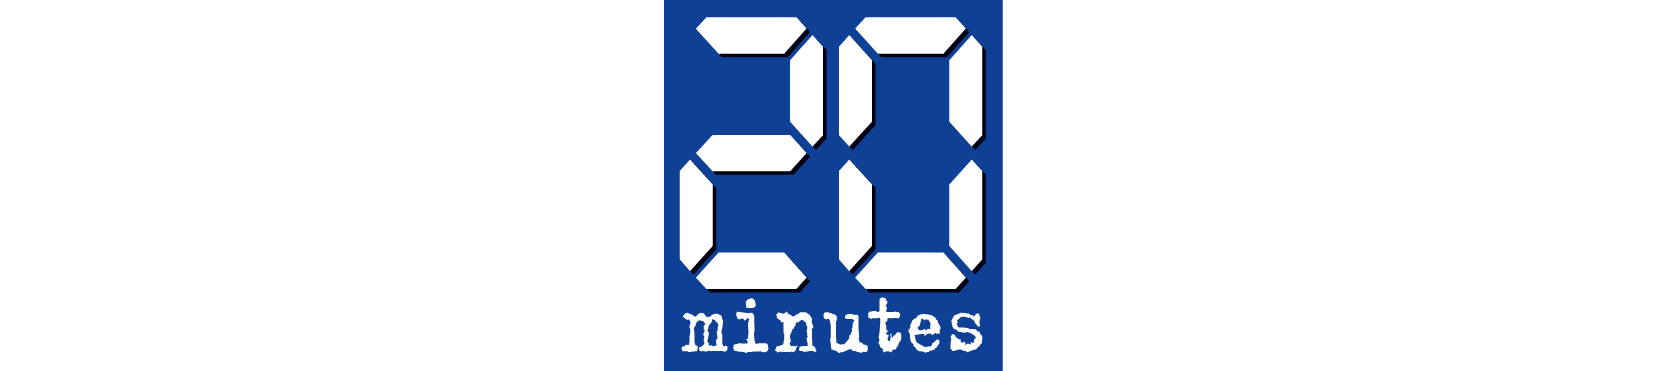 logo du journal 20 minutes